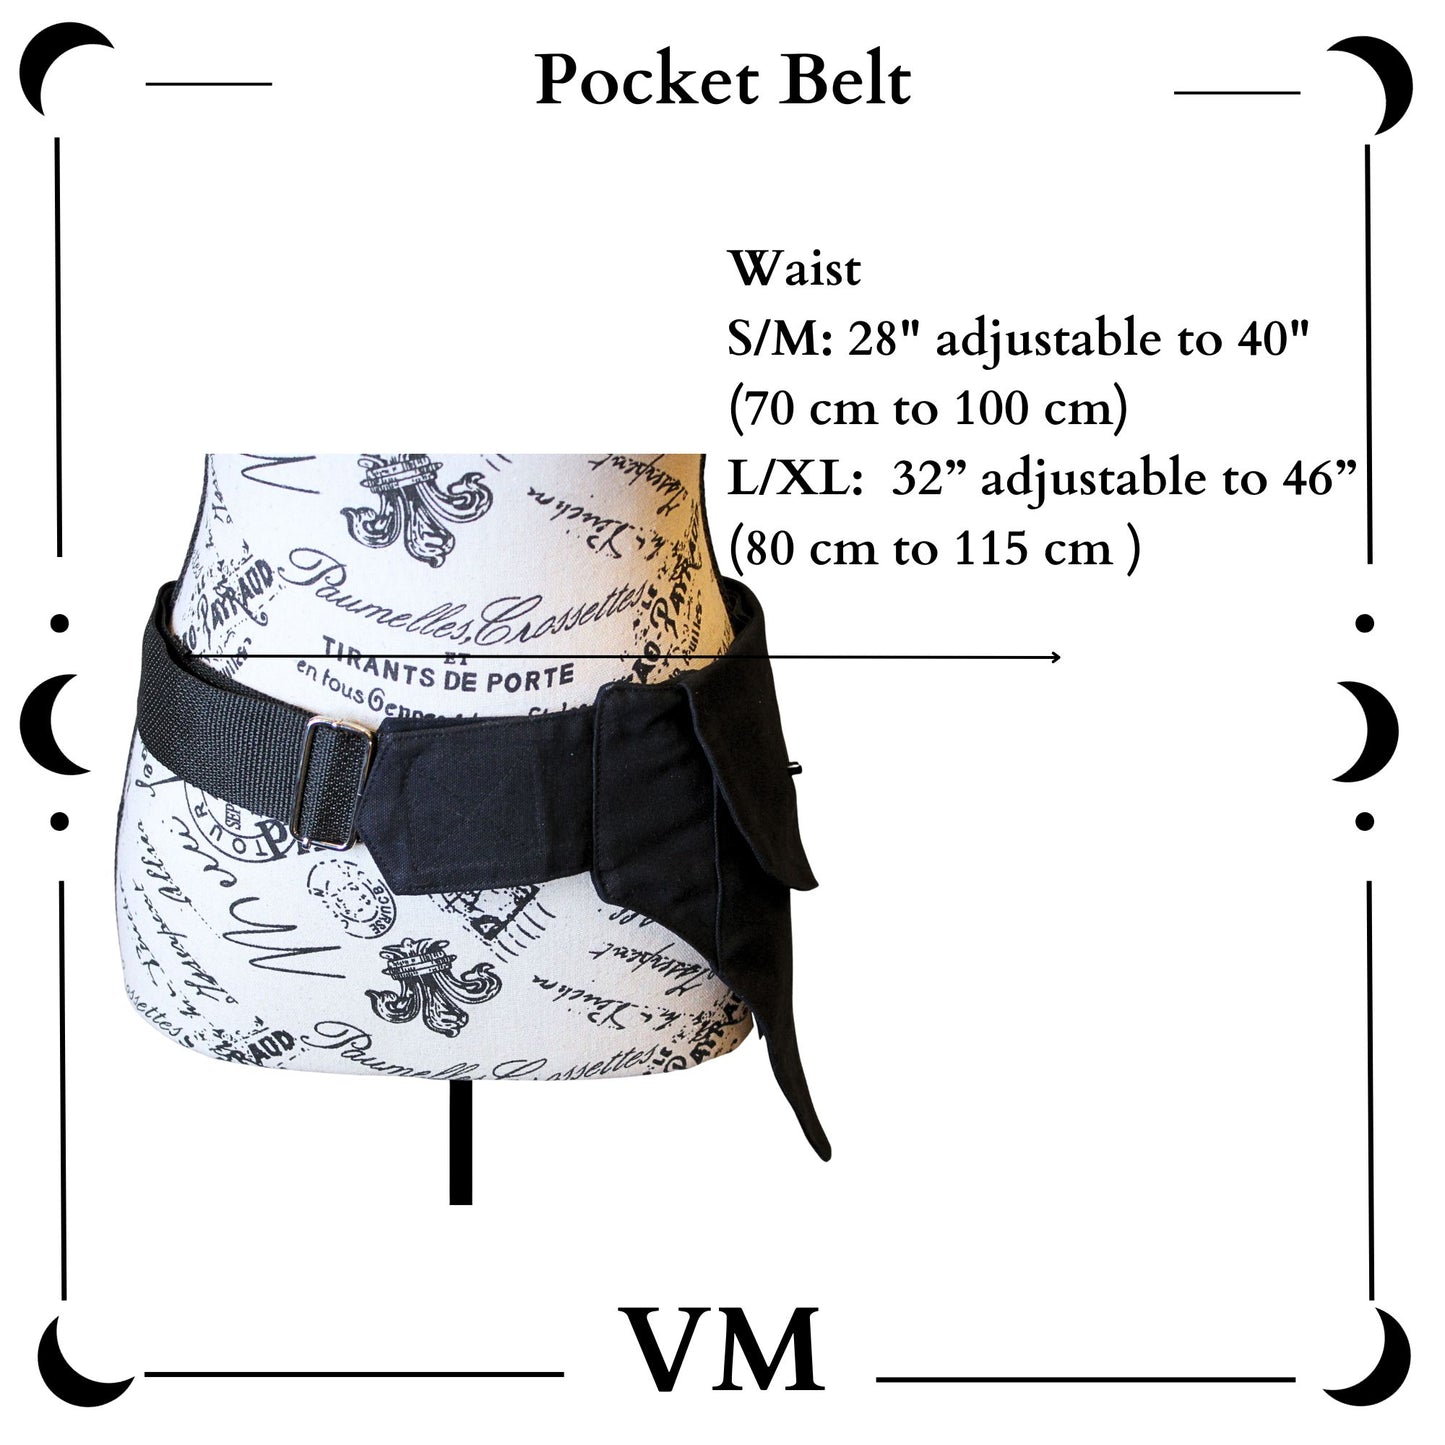 The VM Point Pocket Belt